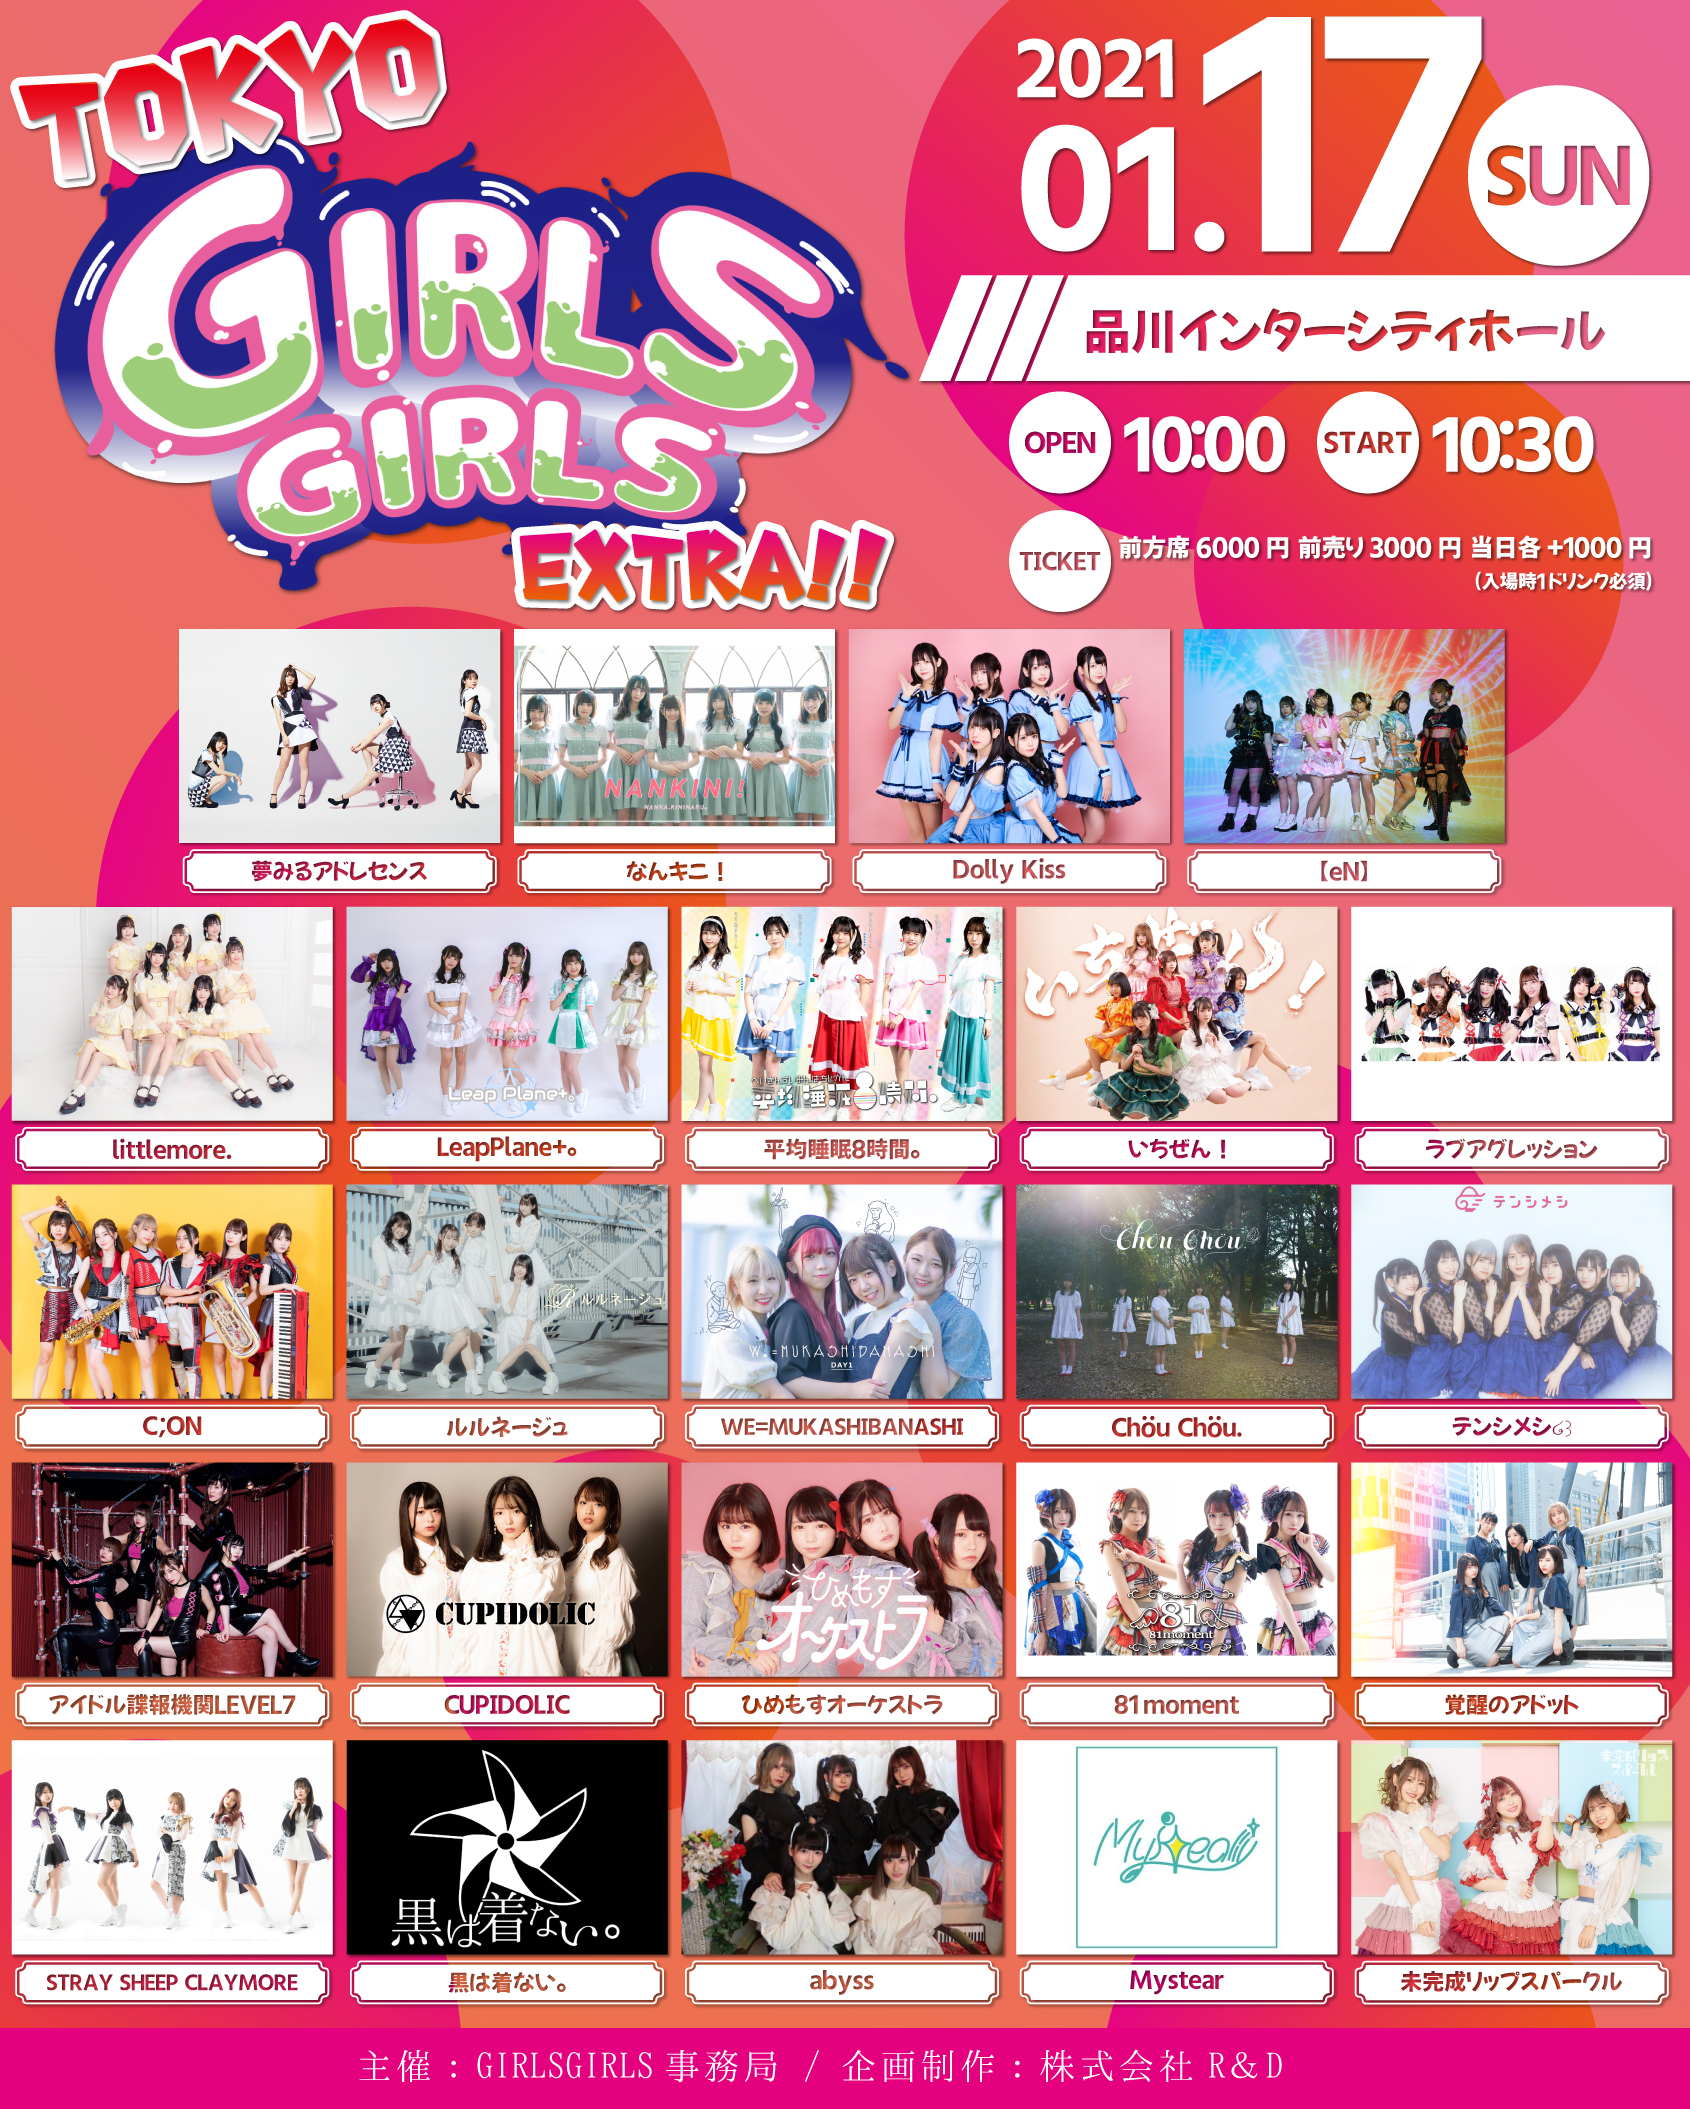 1/17(日) TOKYO GIRLS GIRLS extra!!